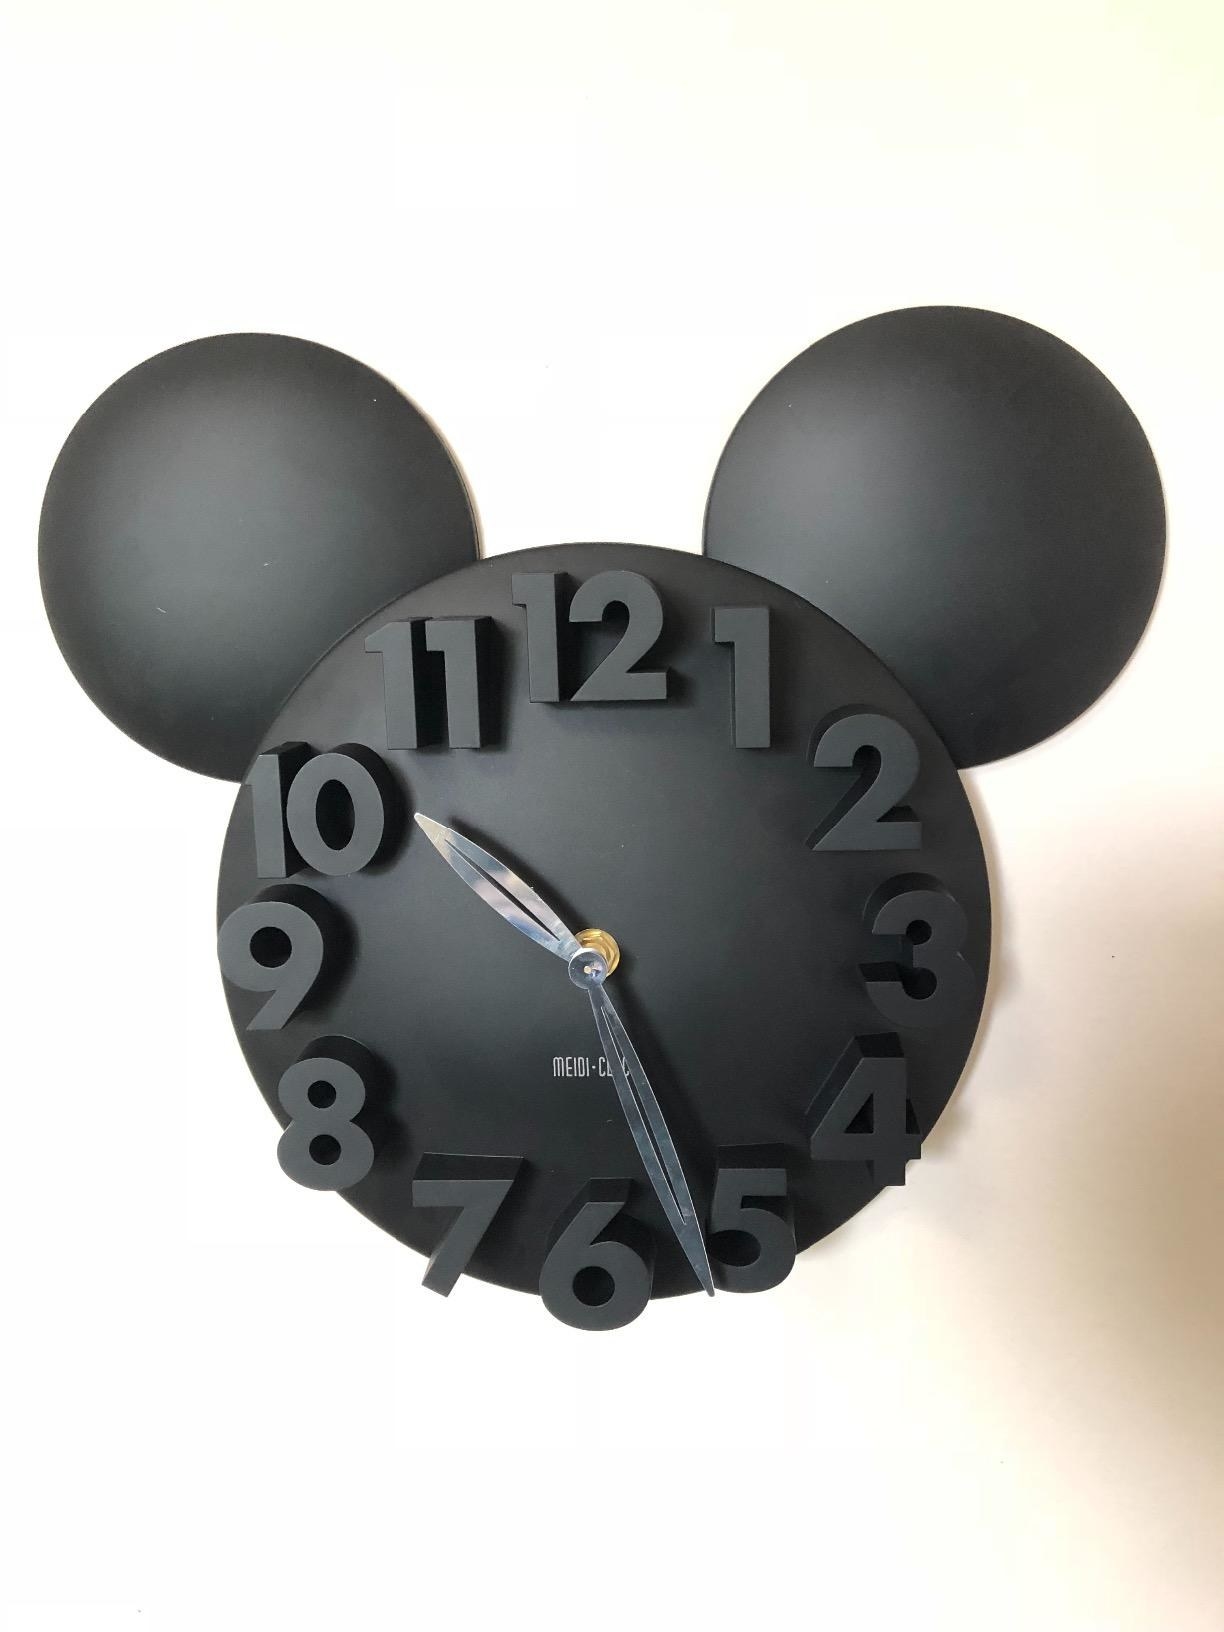 Mickey clock hanging on wall